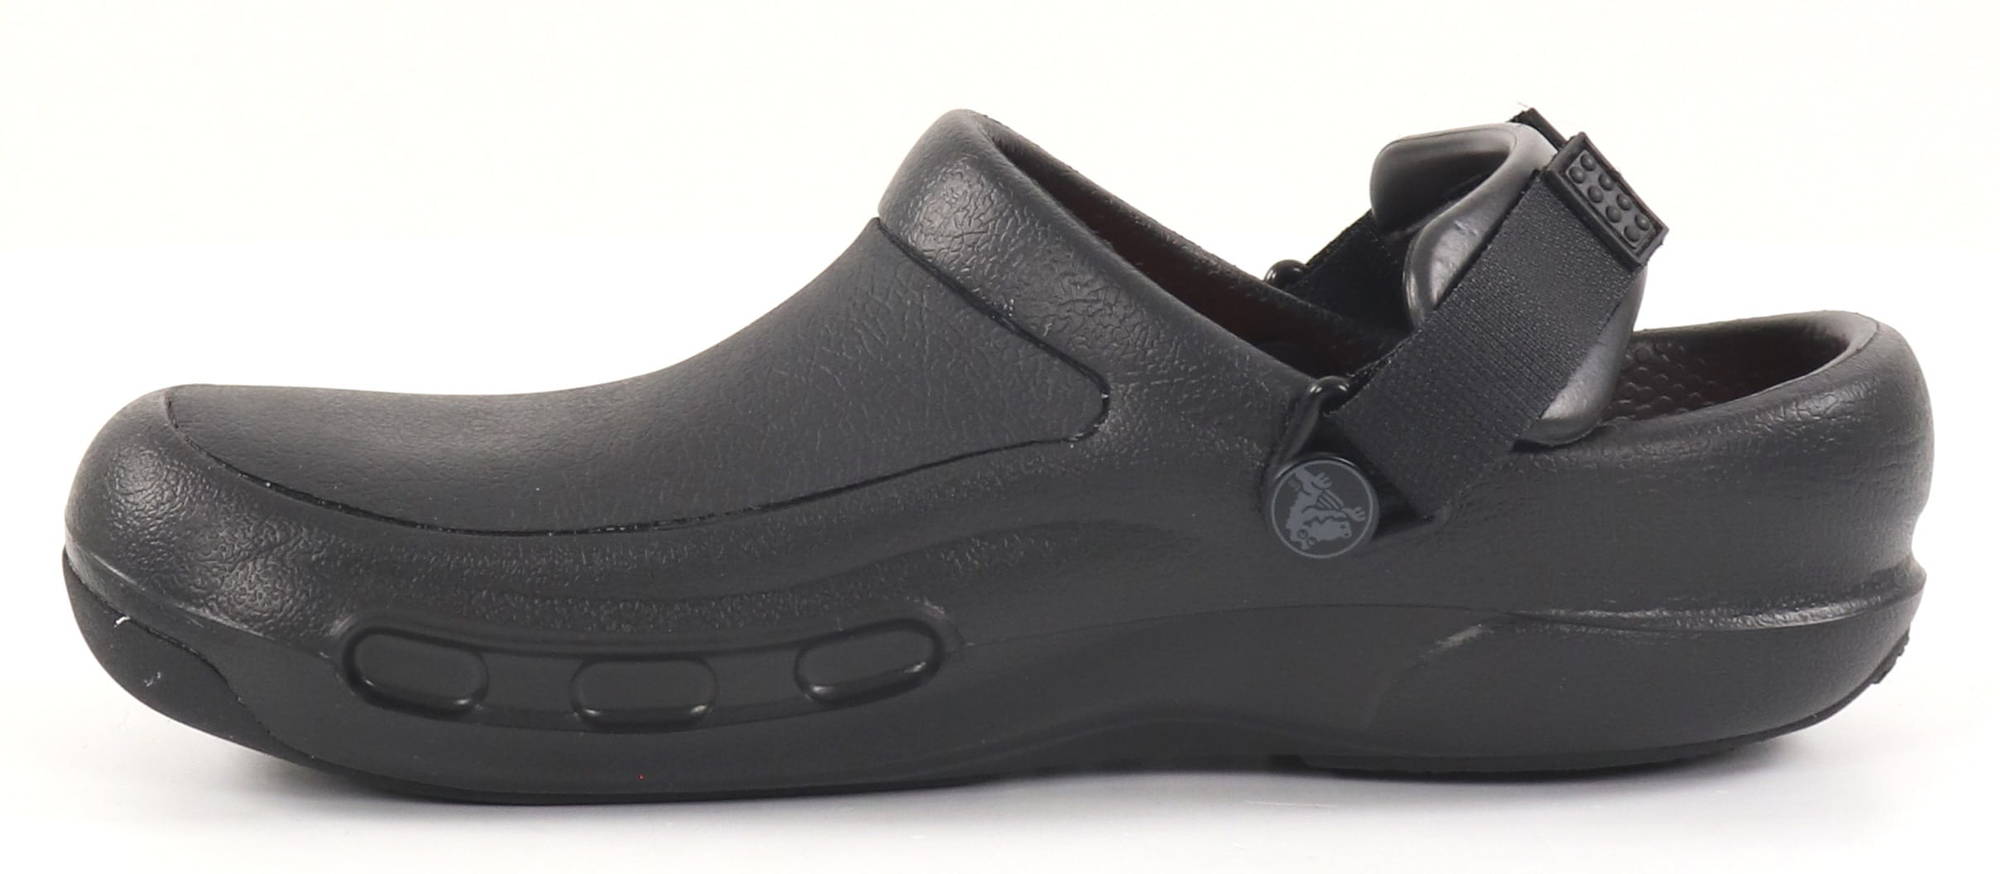 Clog LiteRide black Pro - Stilettoshop.eu webstore Bistro Crocs